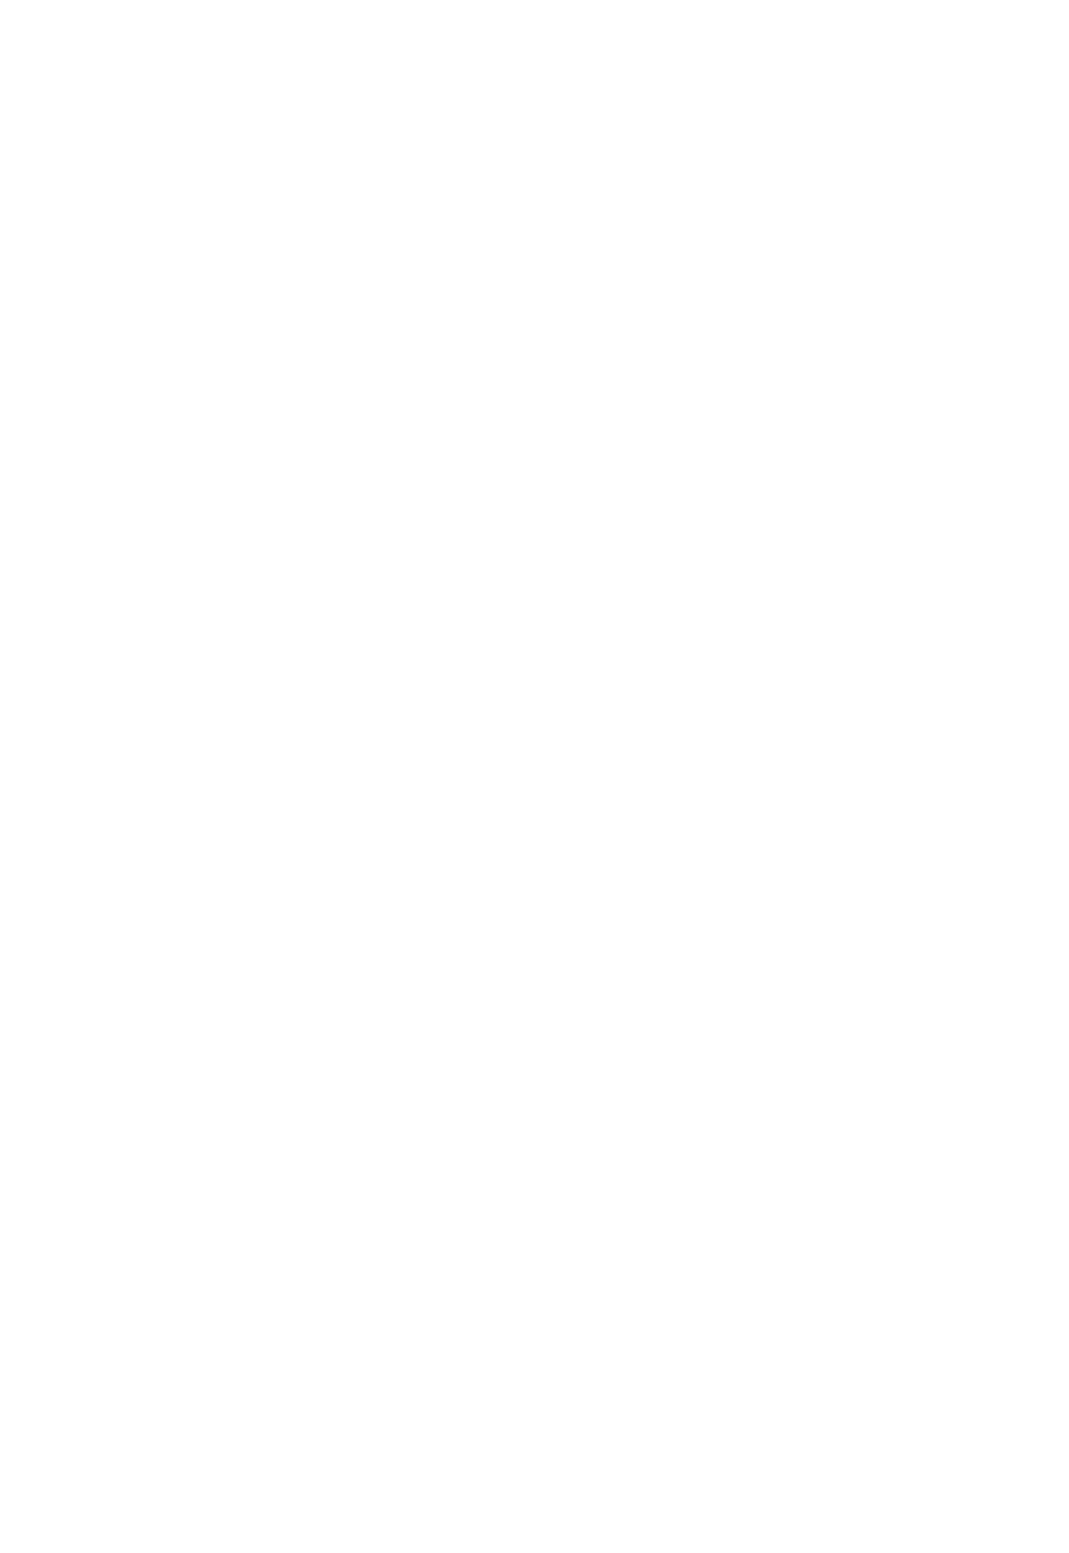 SCYNEXIS logo for dark backgrounds (transparent PNG)